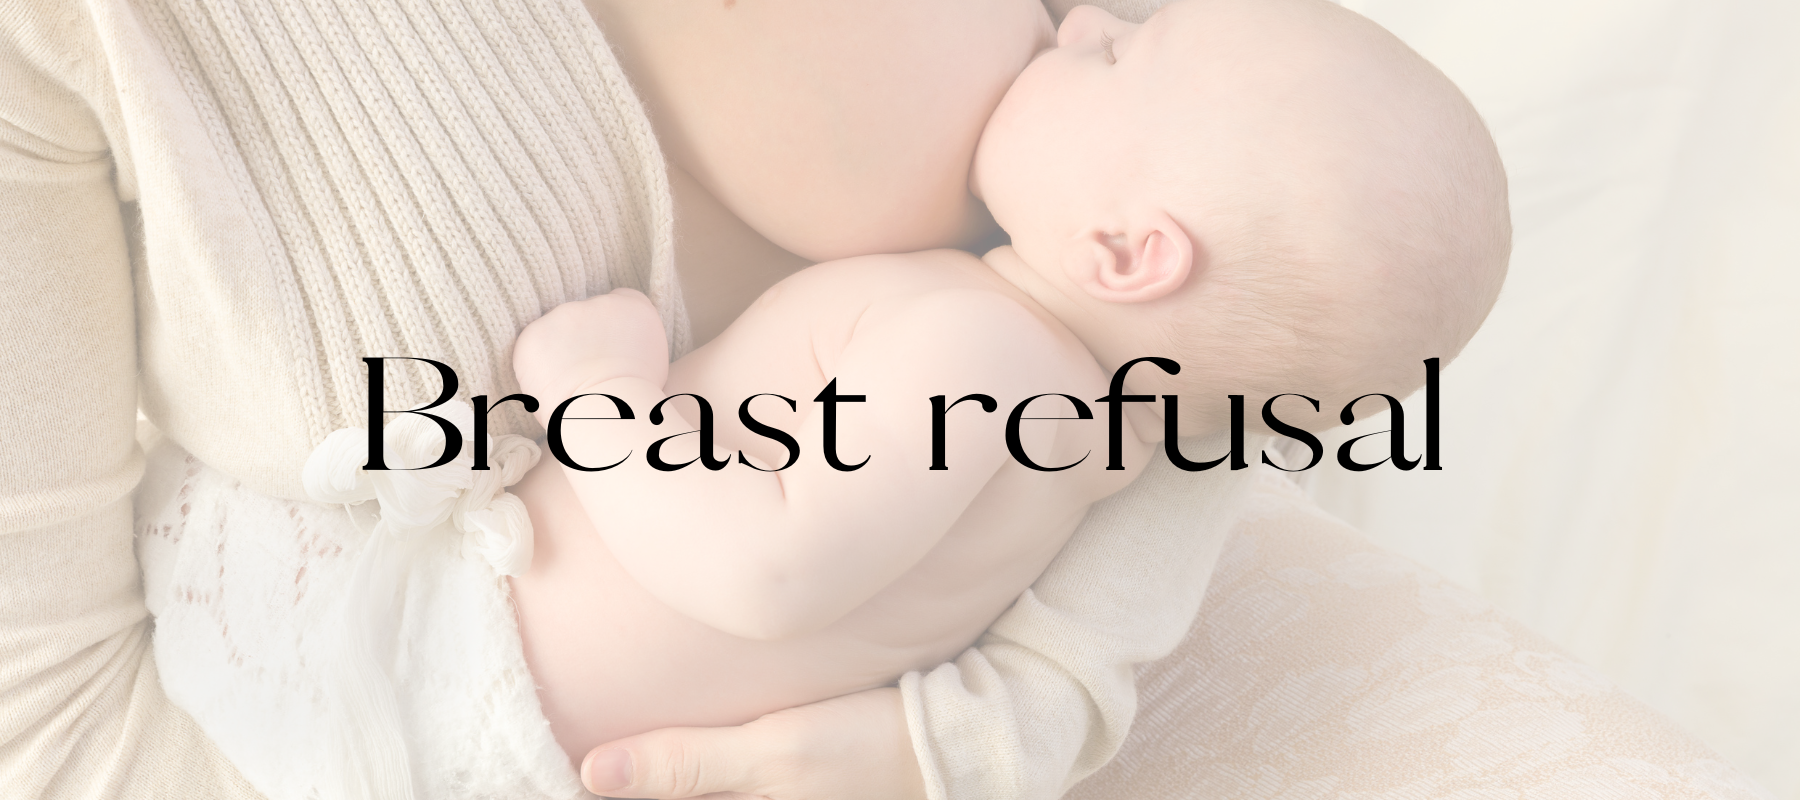 Breast refusal